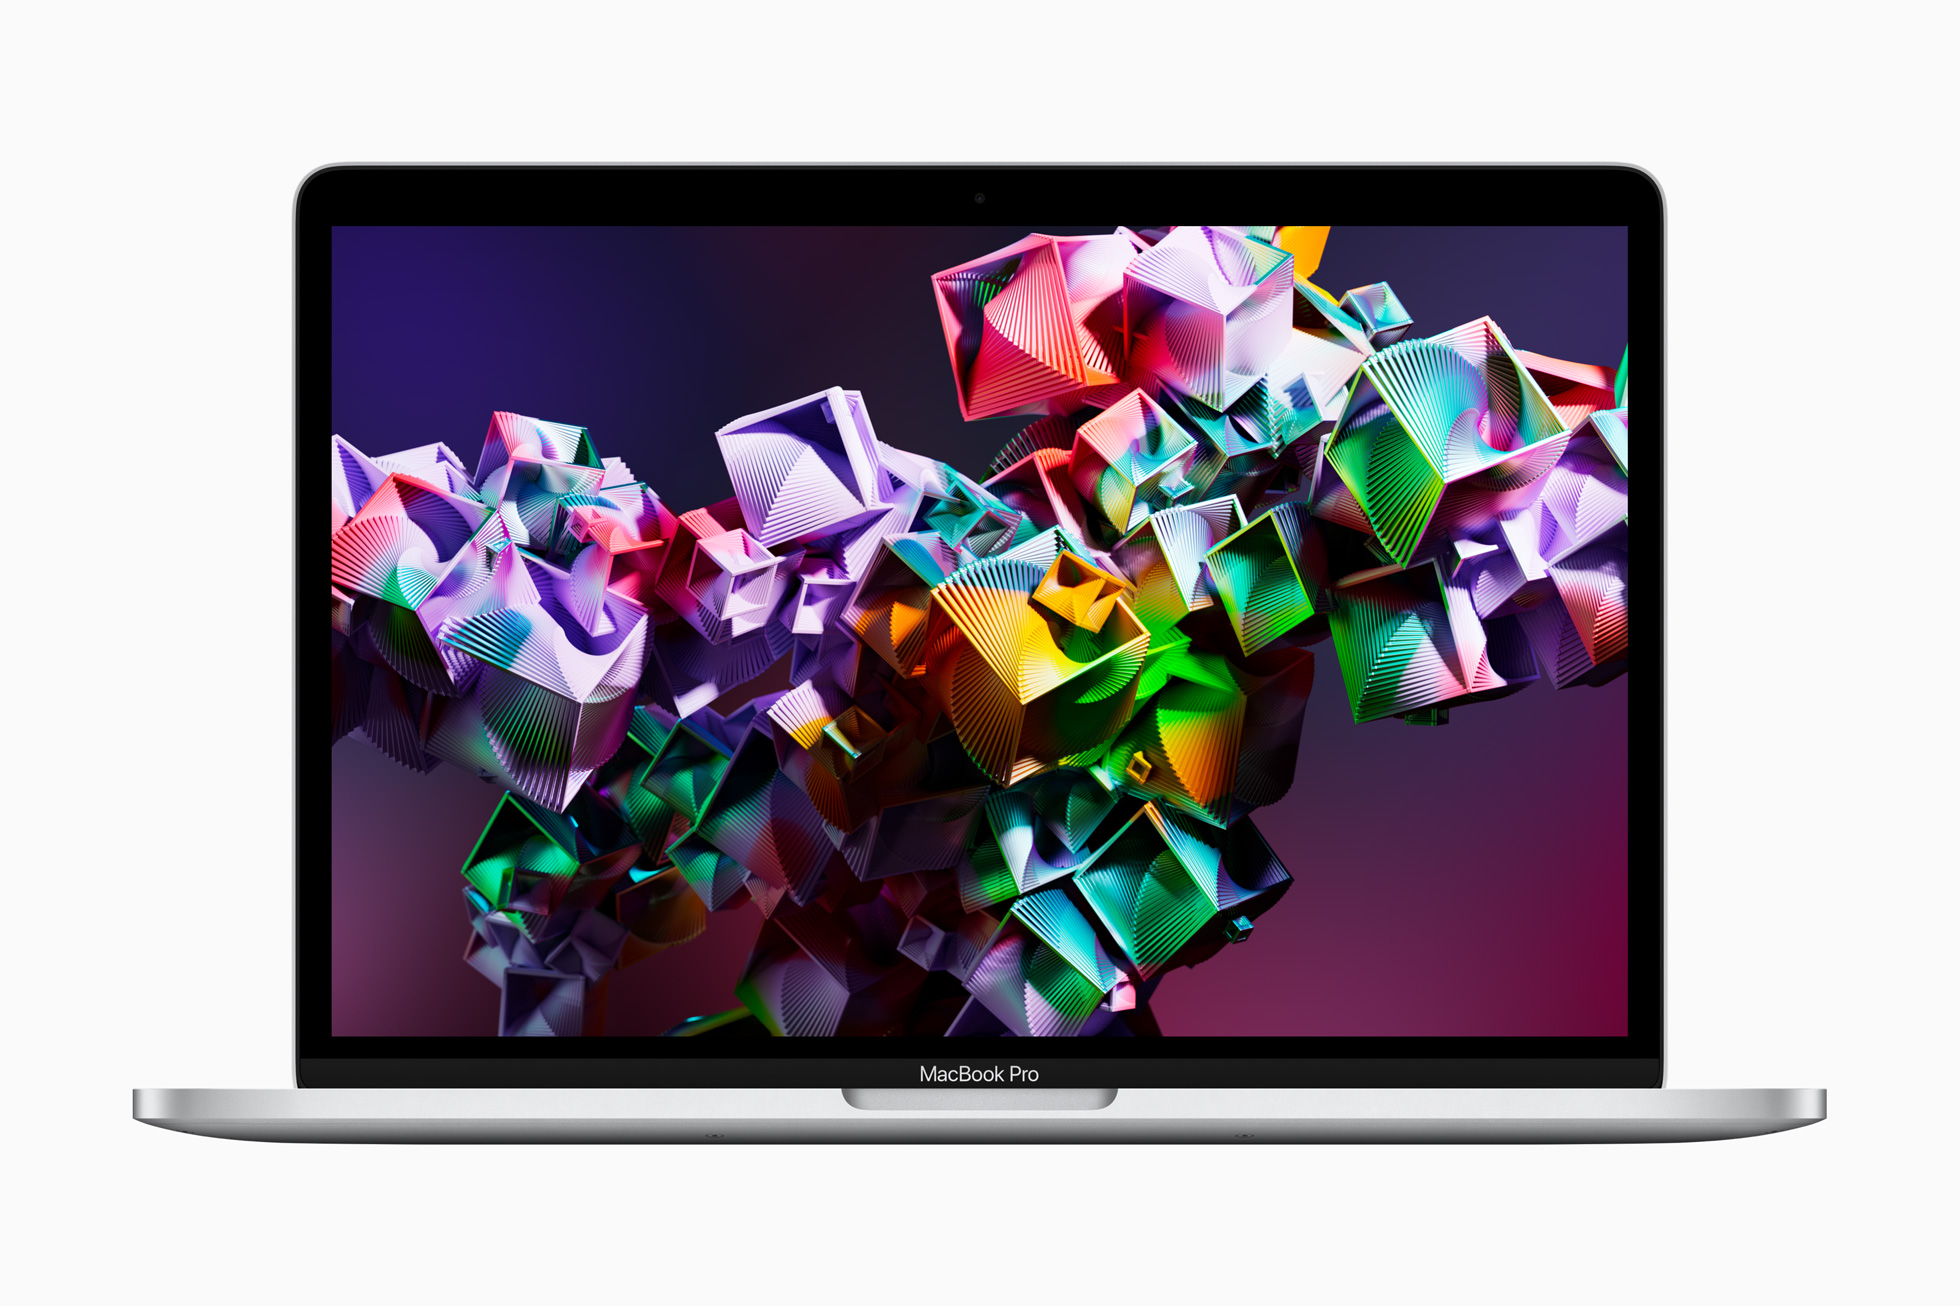 Macbook Desktop Wallpapers Top Những Hình Ảnh Đẹp